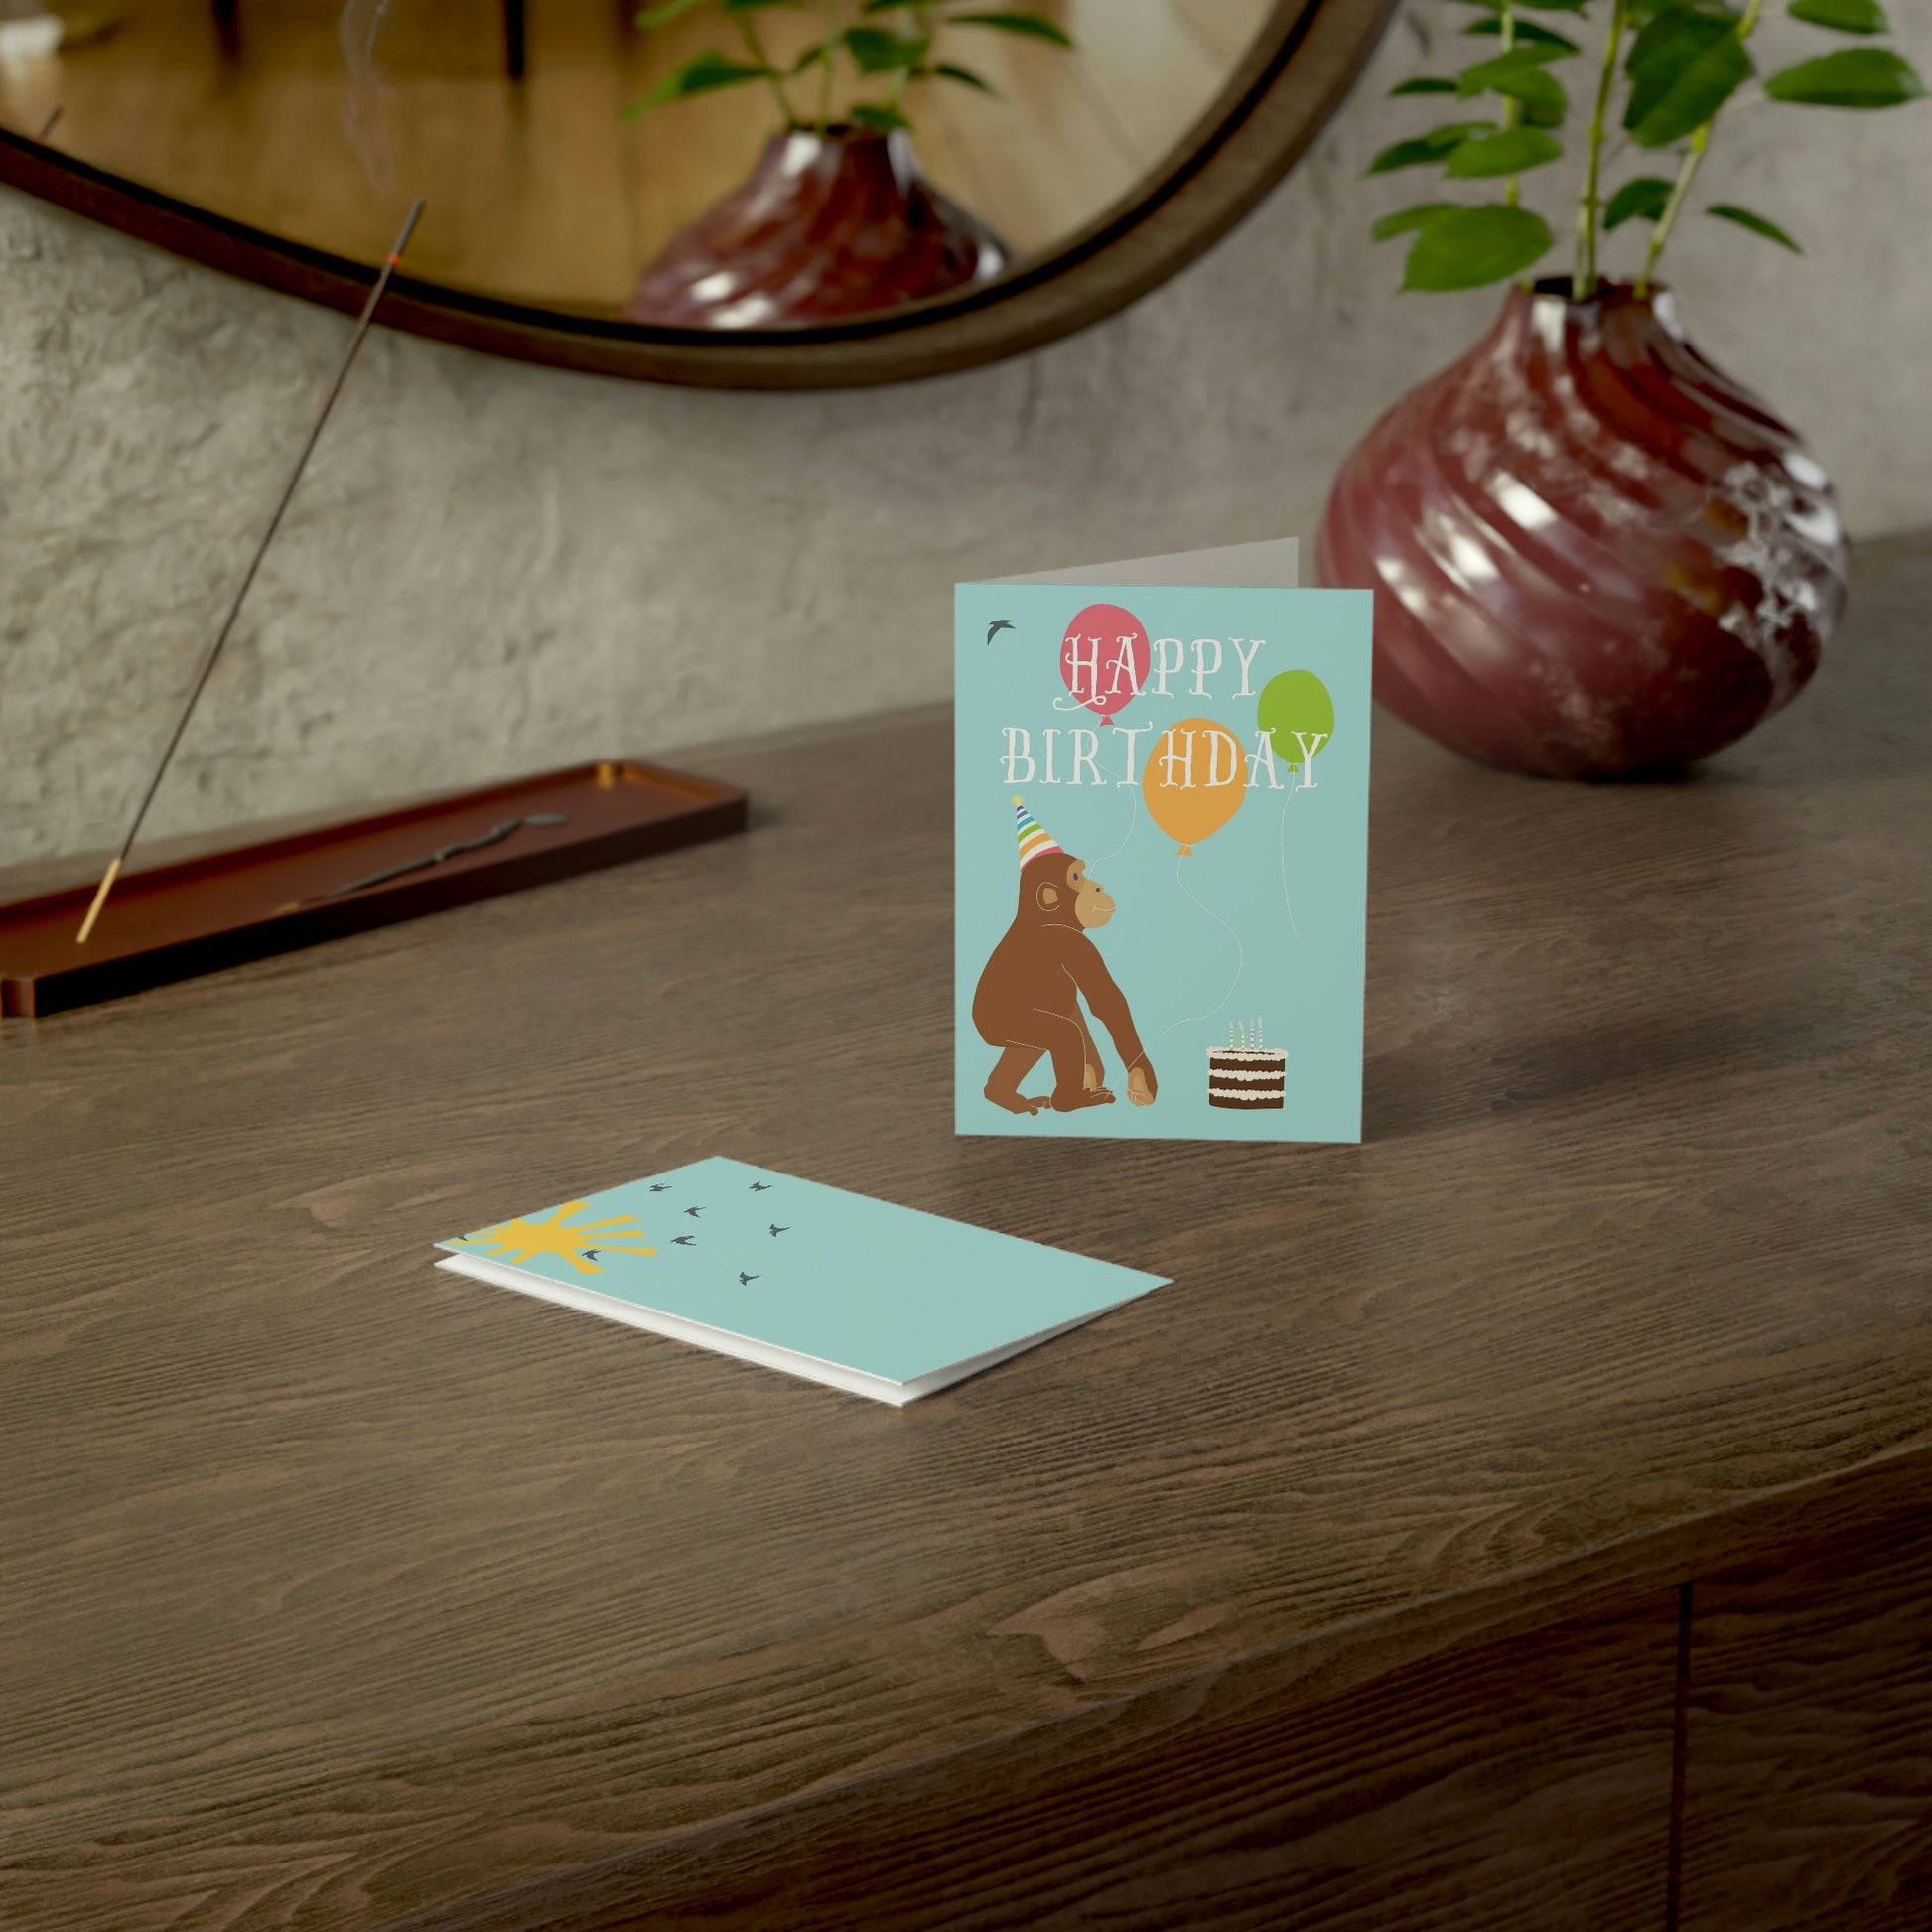 Forward Facing View of Monkey Birthday Card on Dark Table